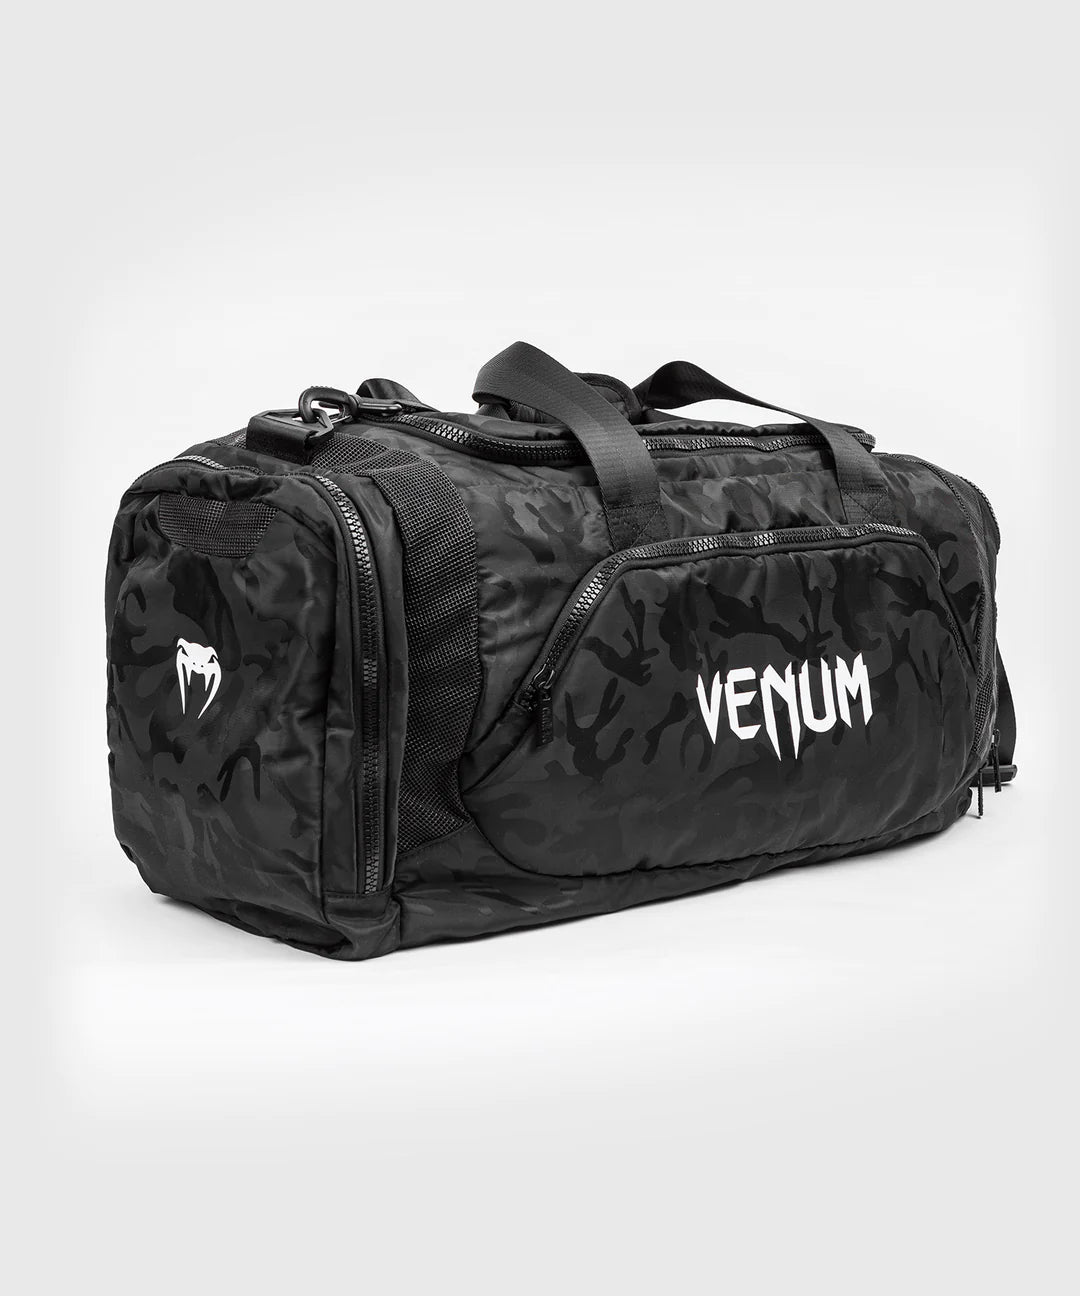 VENUM - TRAINER LITE SPORTS BAGS